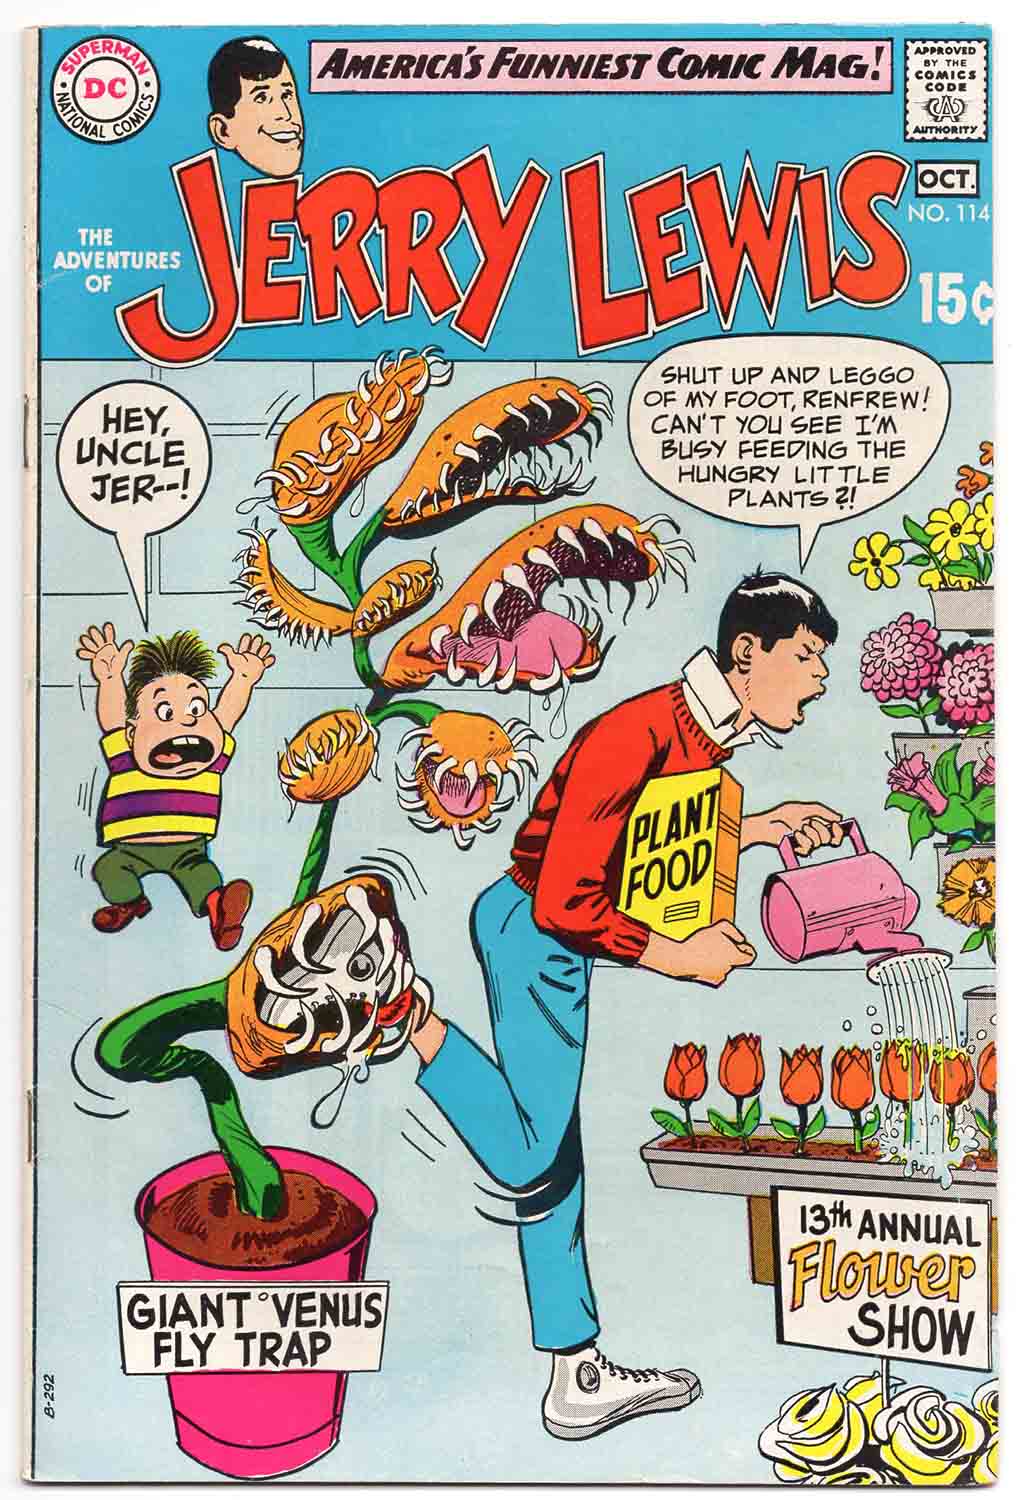 Adventures of Jerry Lewis #114